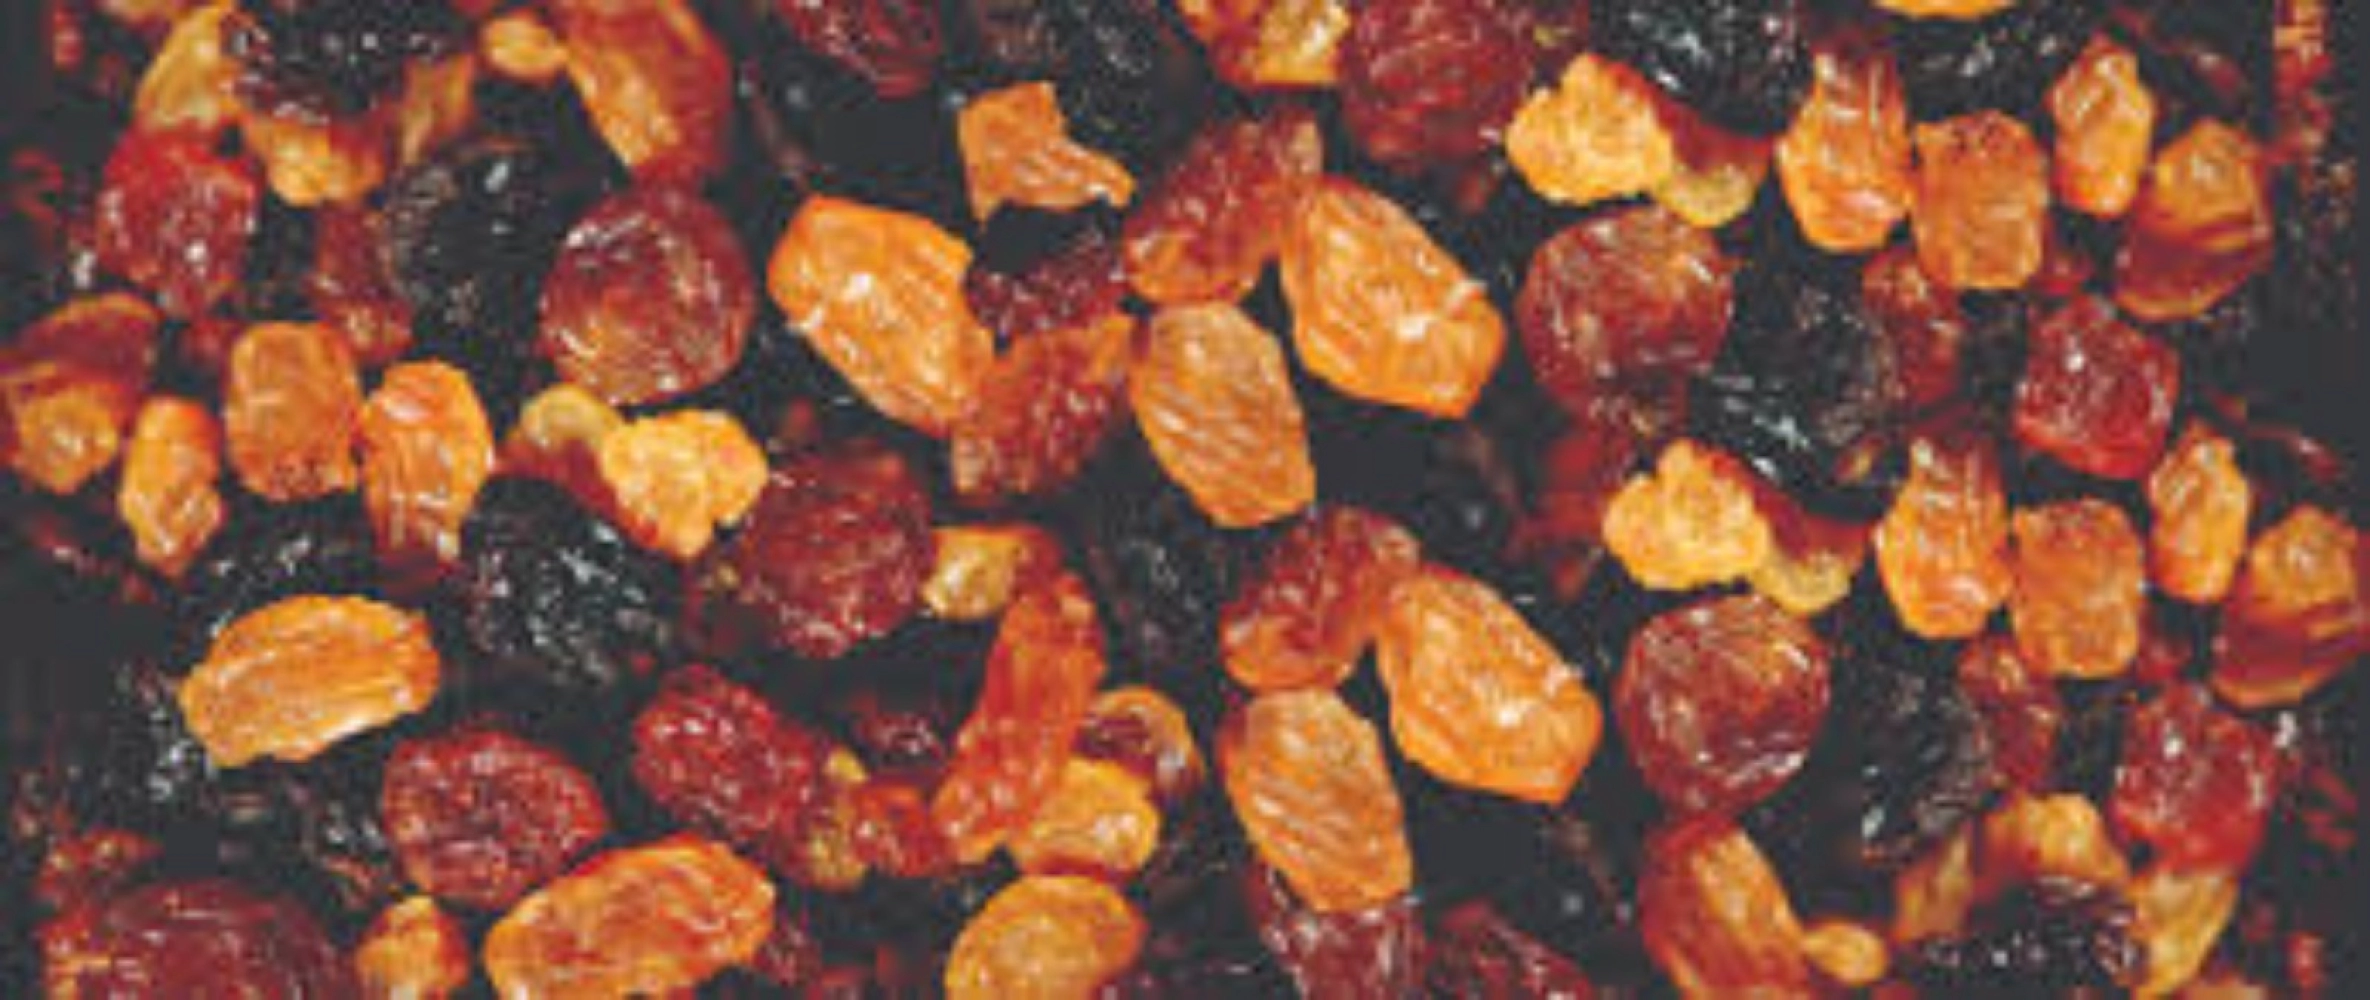 SunView Jumbo Size Organically Grown Raisins